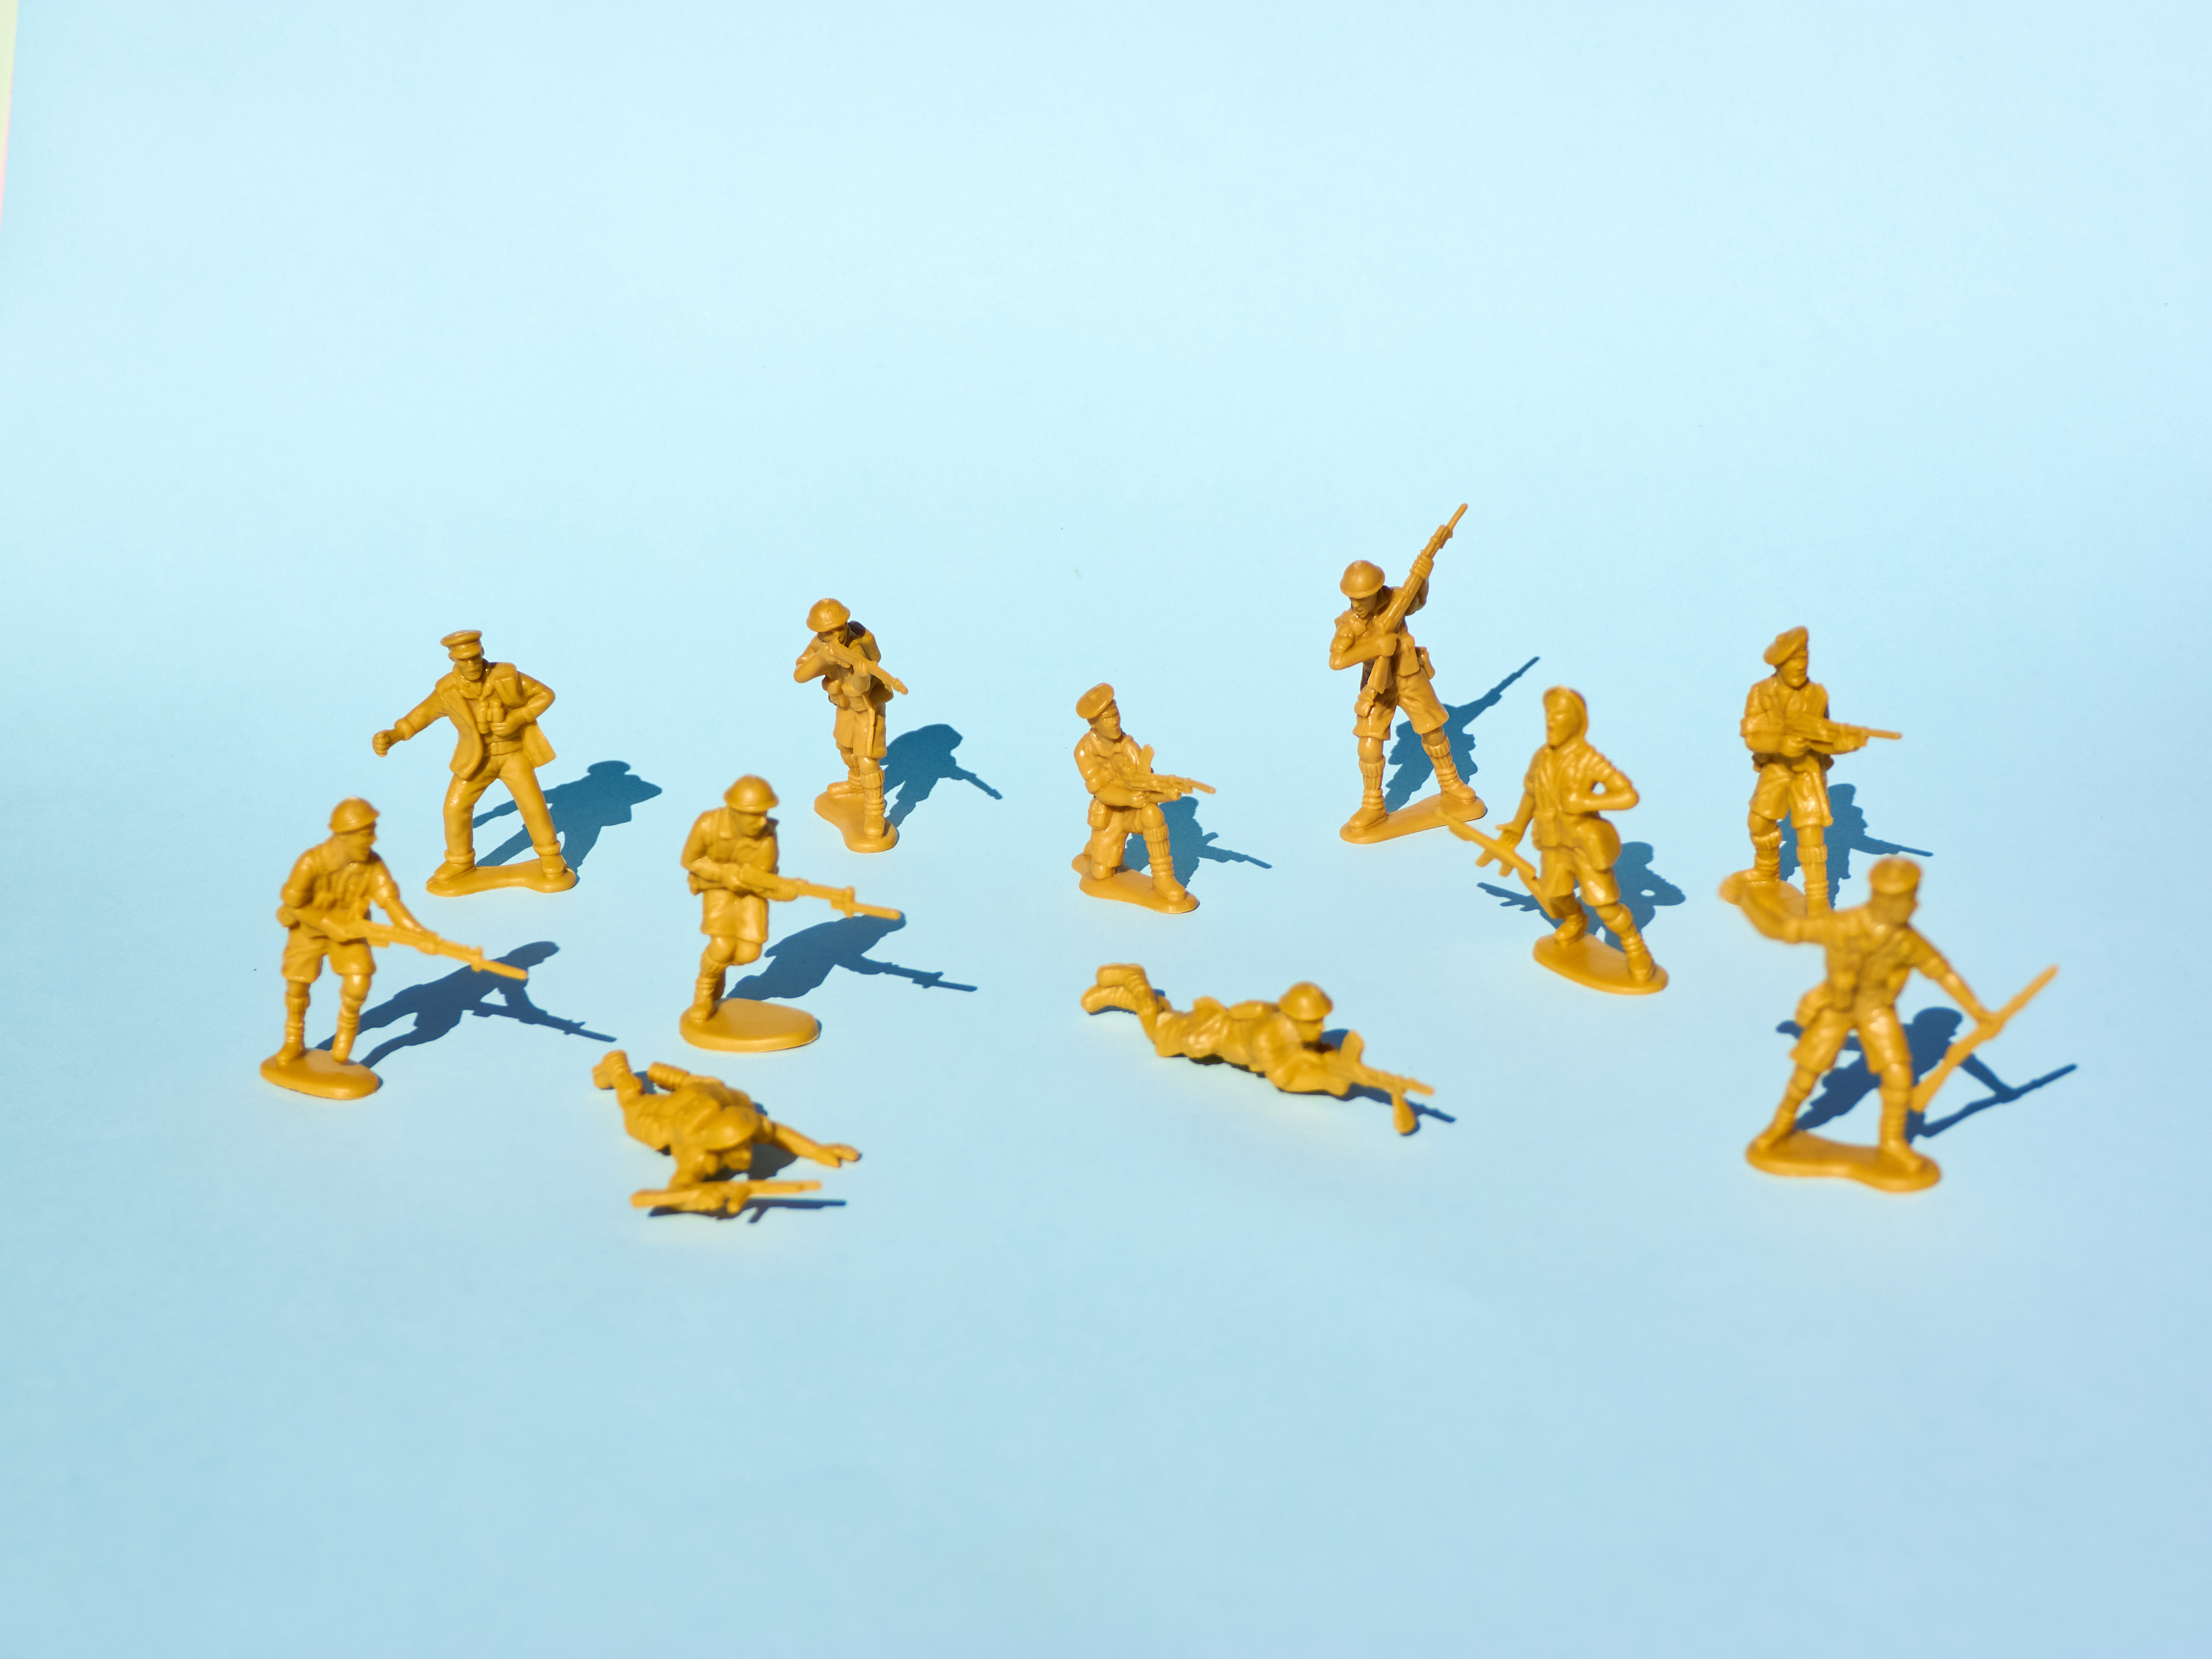 Gambar sekelompok tentara mainan plastik kuning saling mengacungkan senjata dengan latar belakang biru.